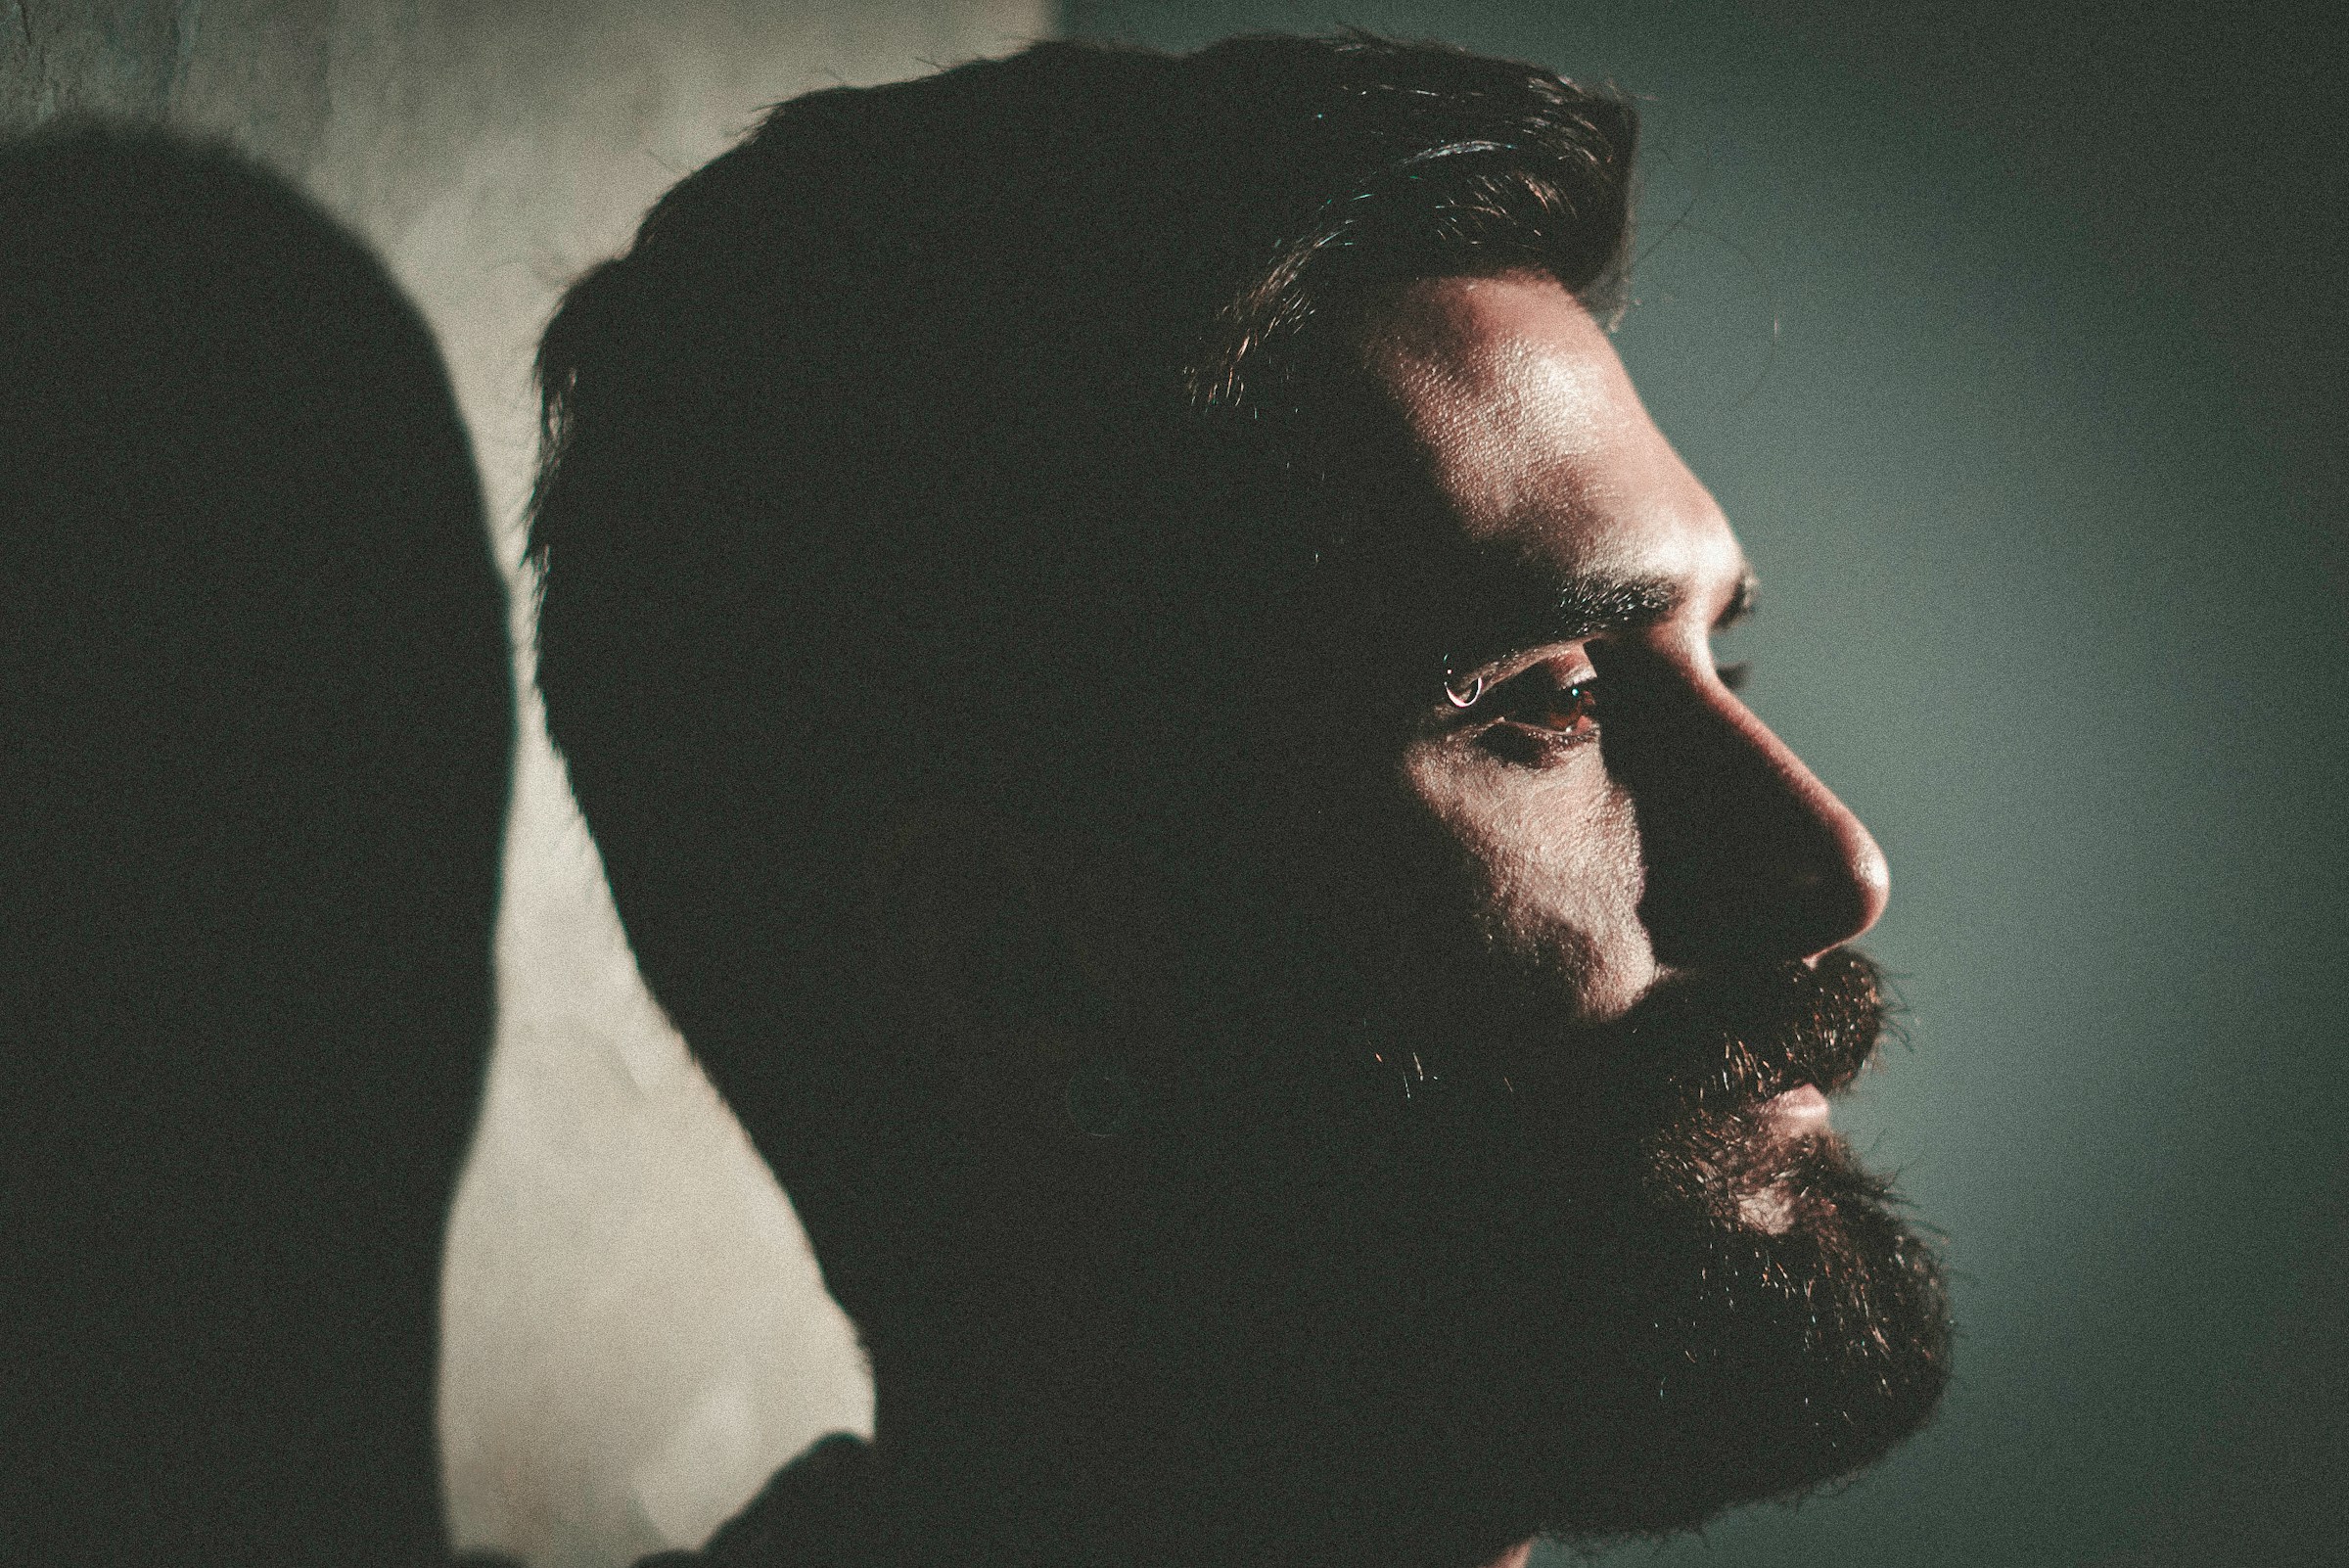 A bearded man | Source: Unsplash